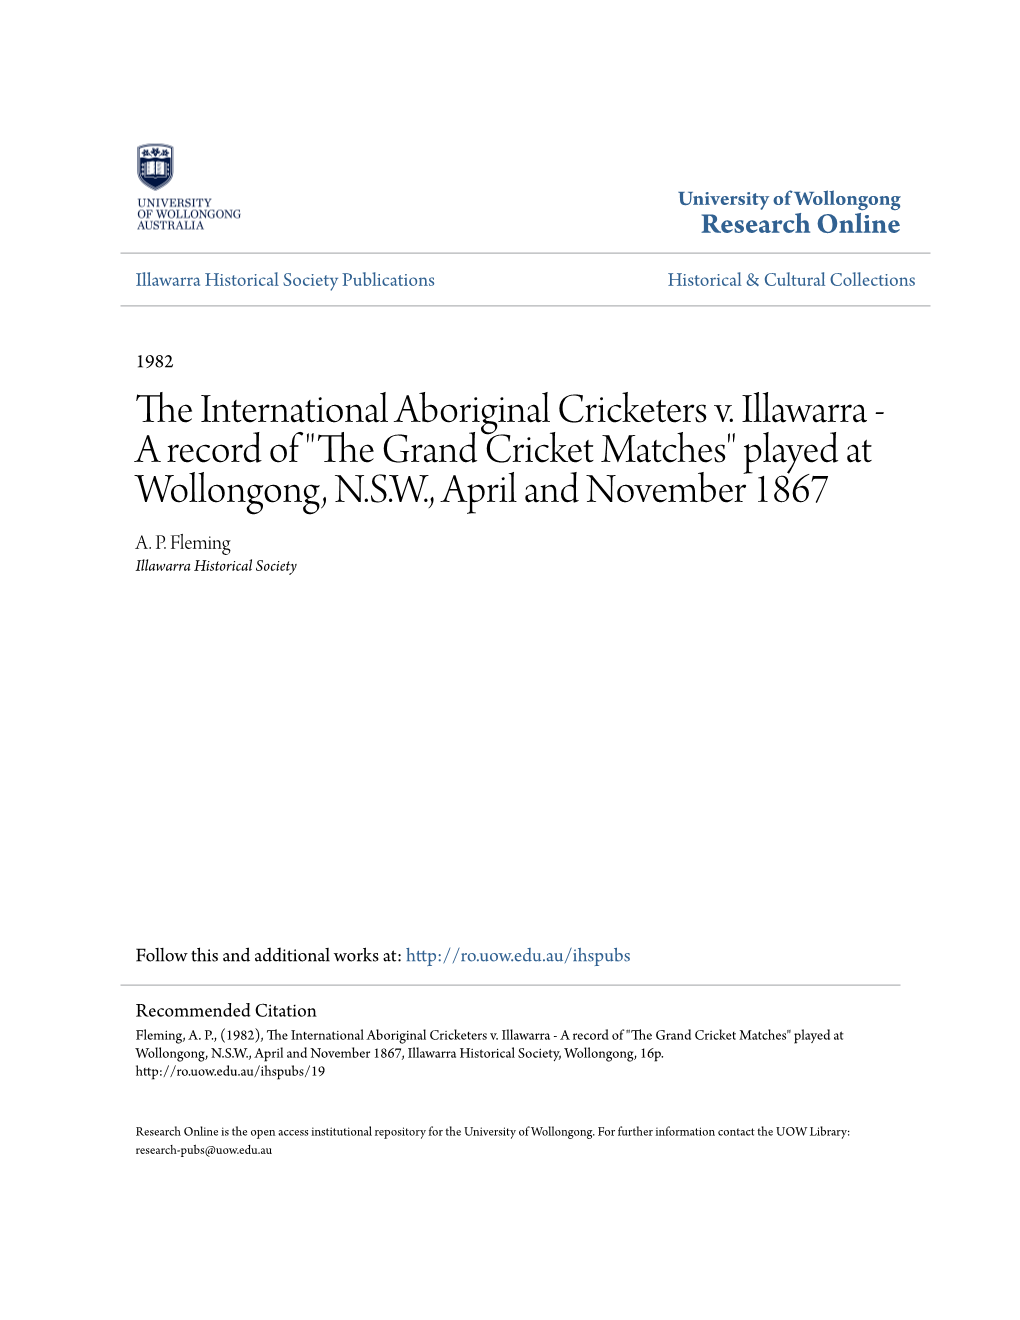 The International Aboriginal Cricketers V. Illawarra